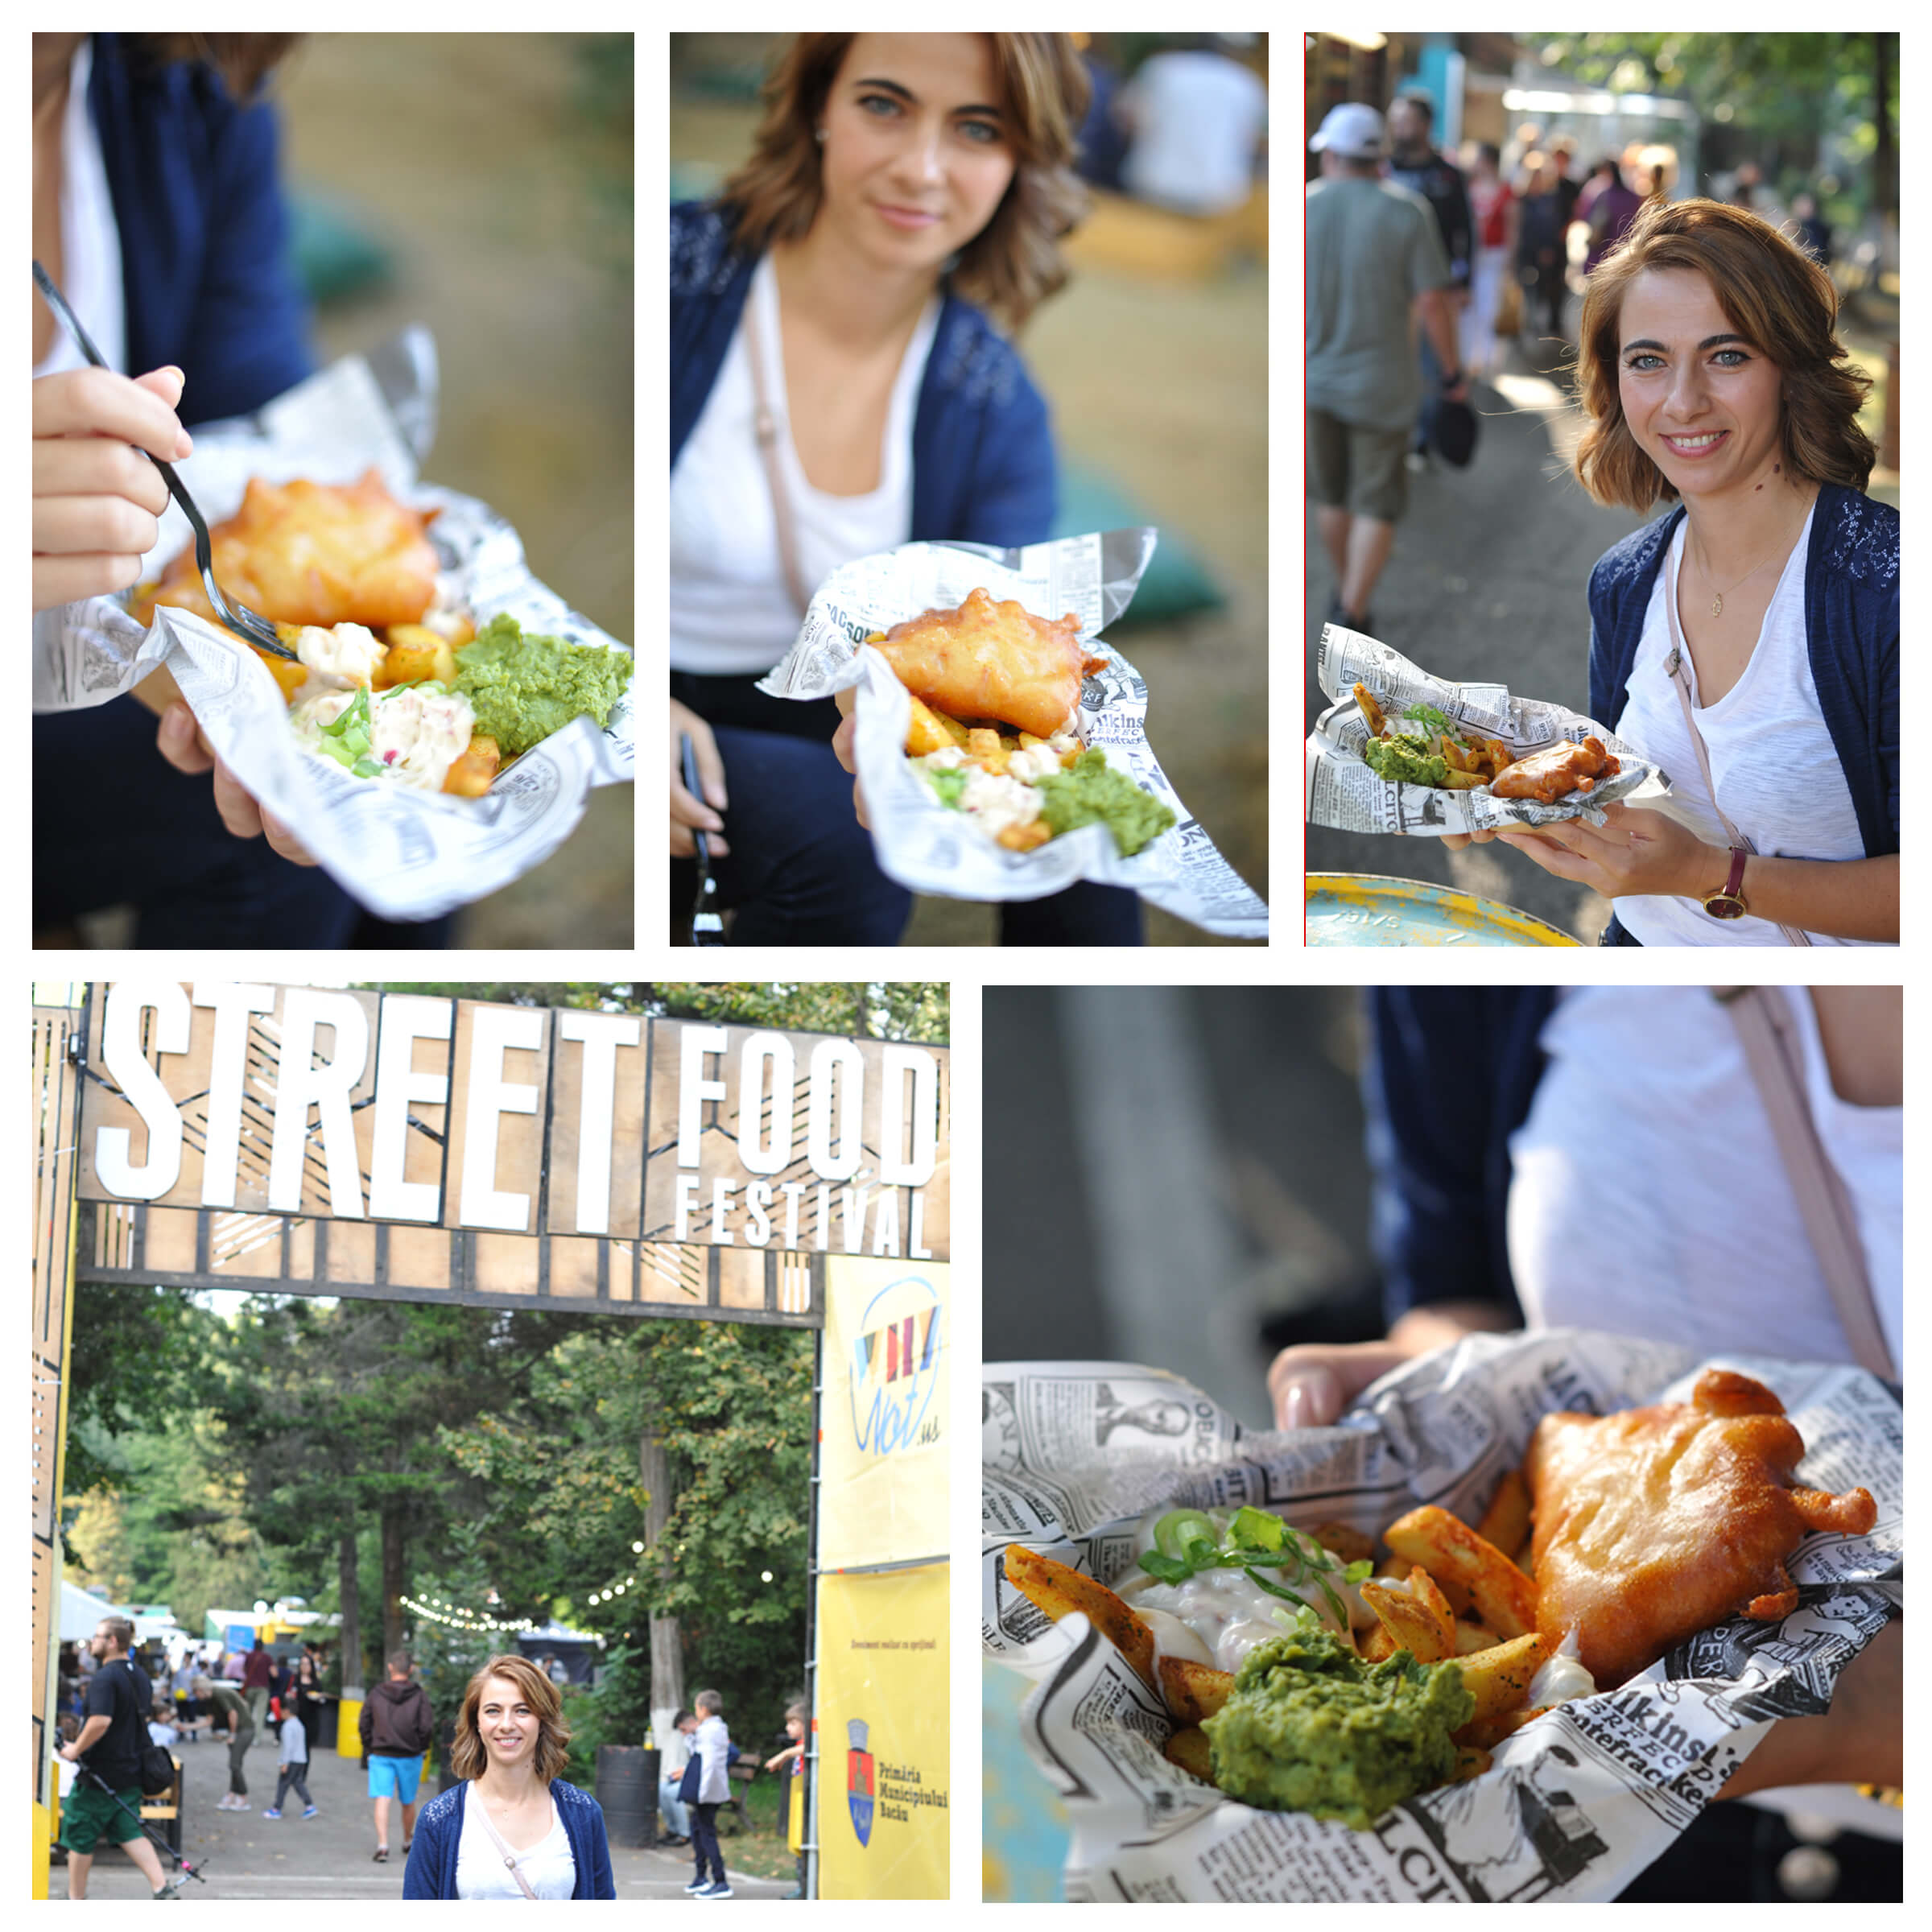 Street Food Festival Bacau